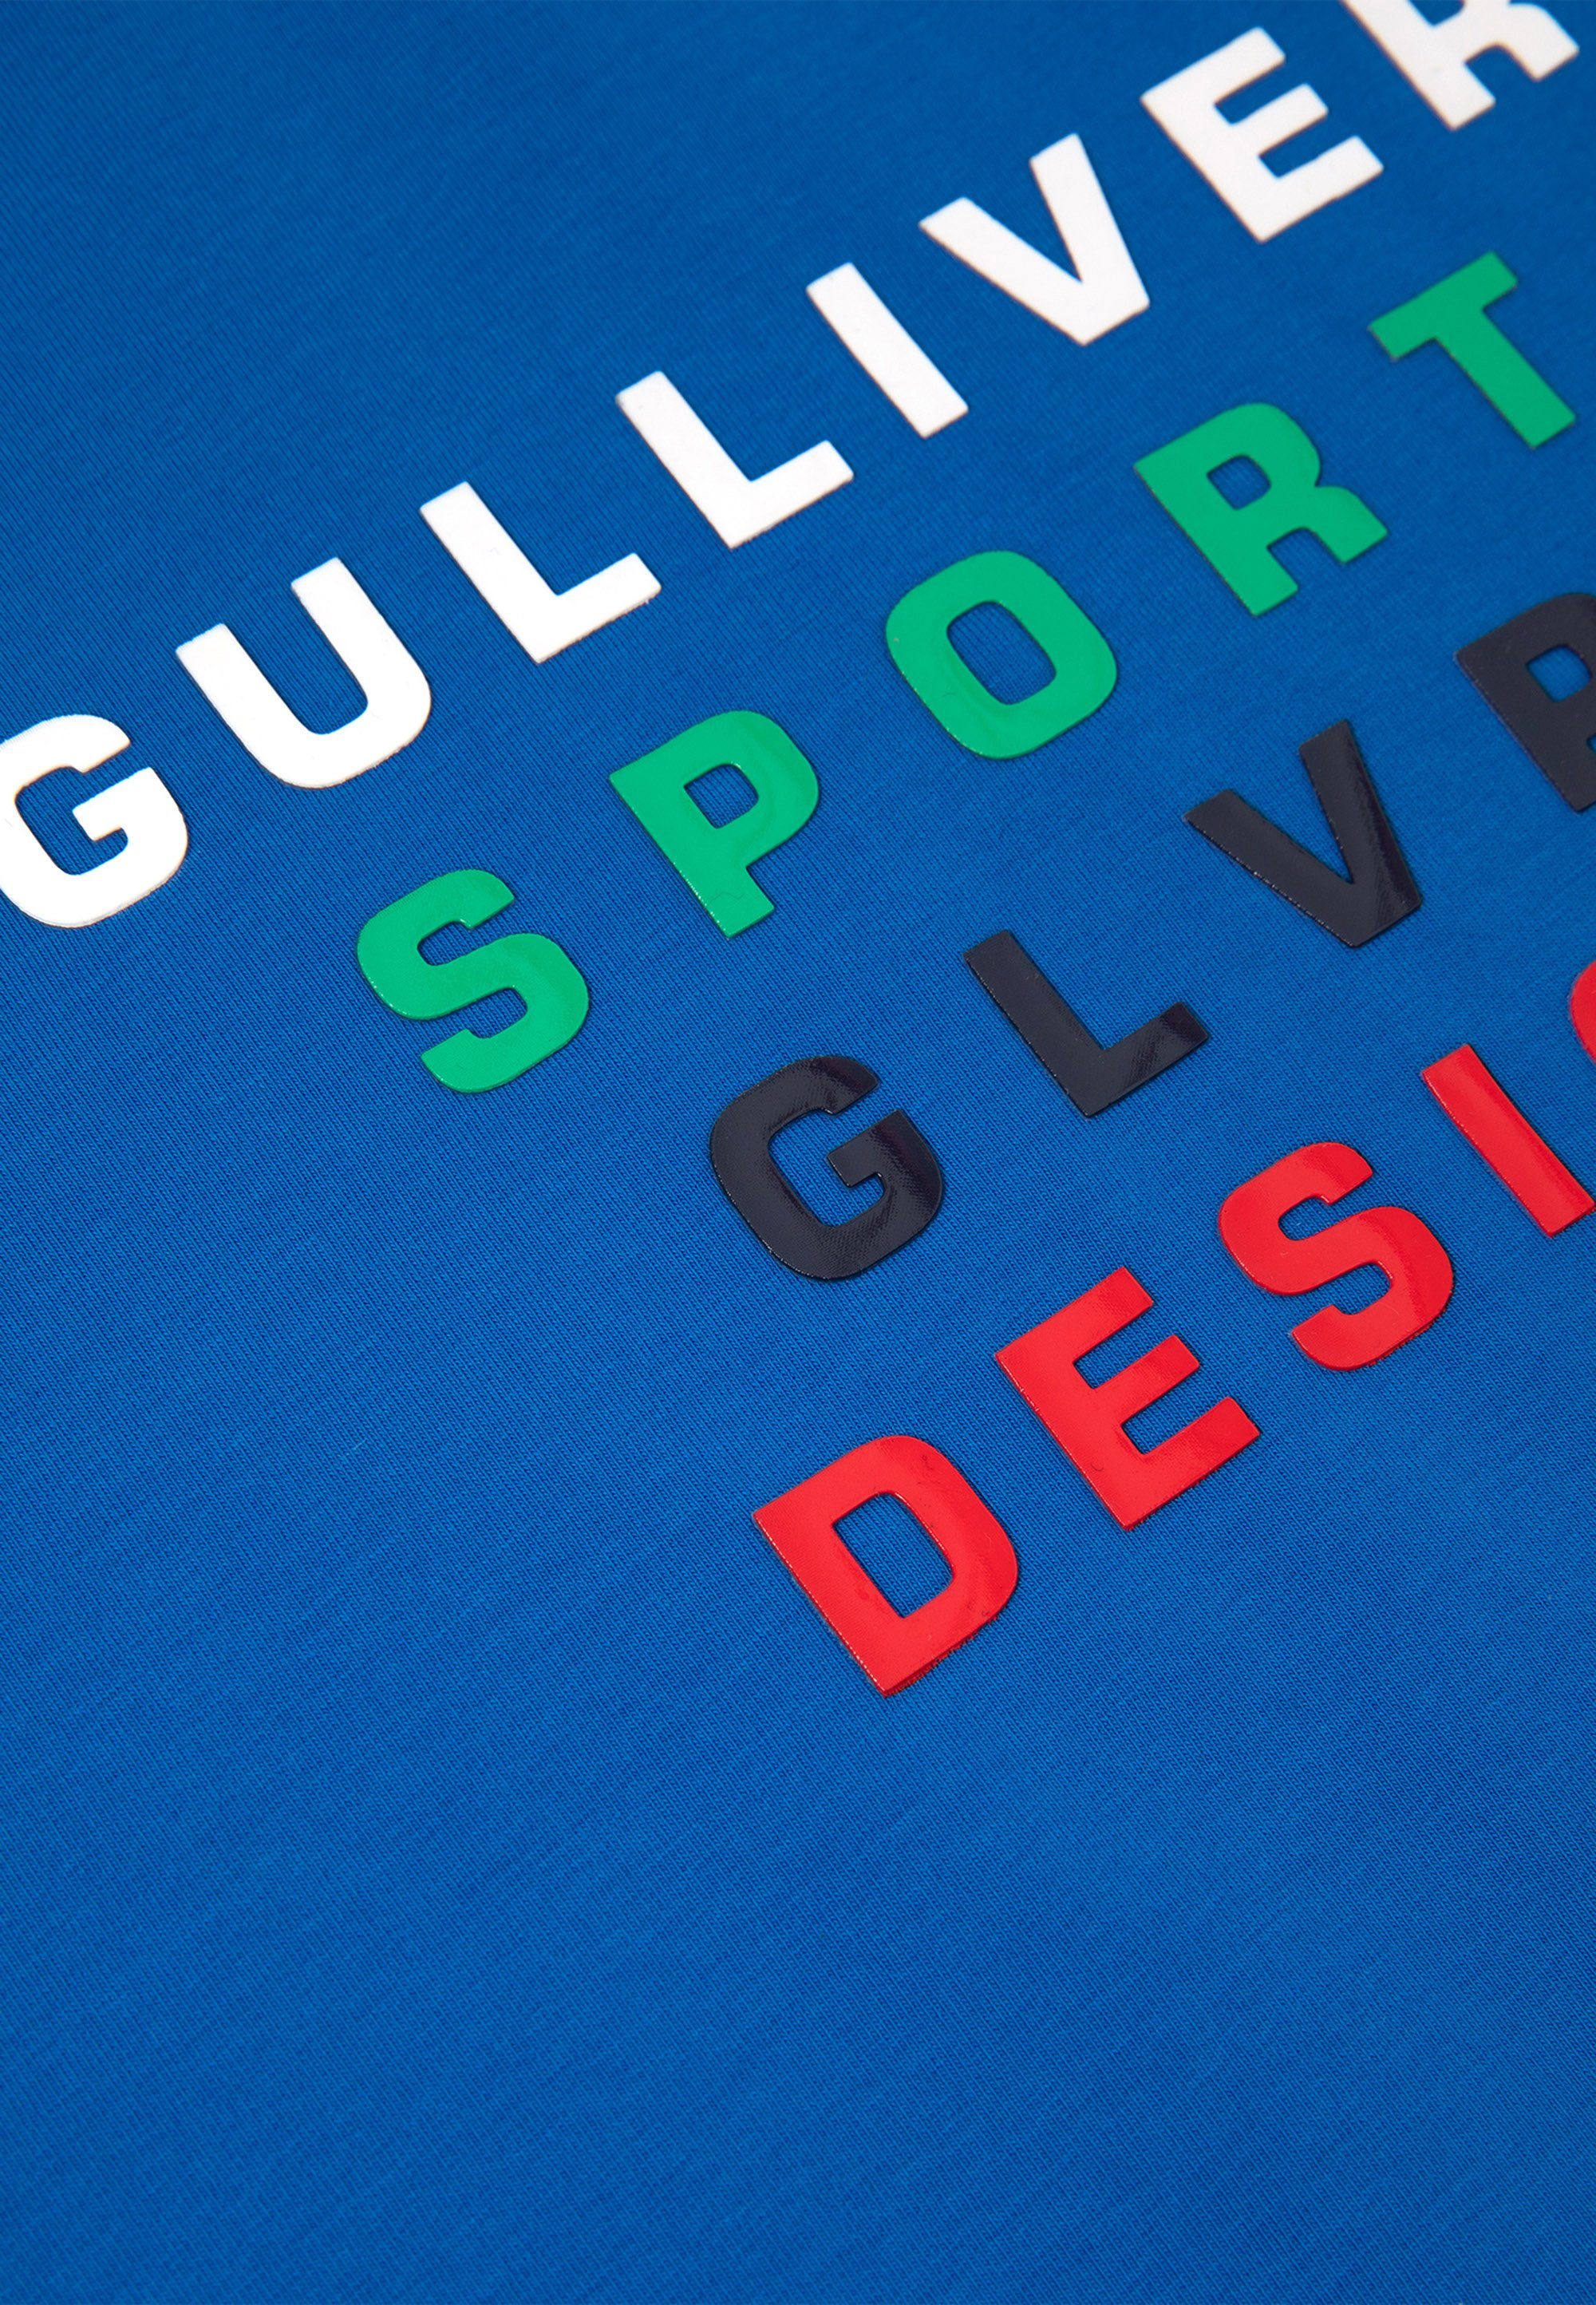 Gulliver T-Shirt Frontprint buntem mit